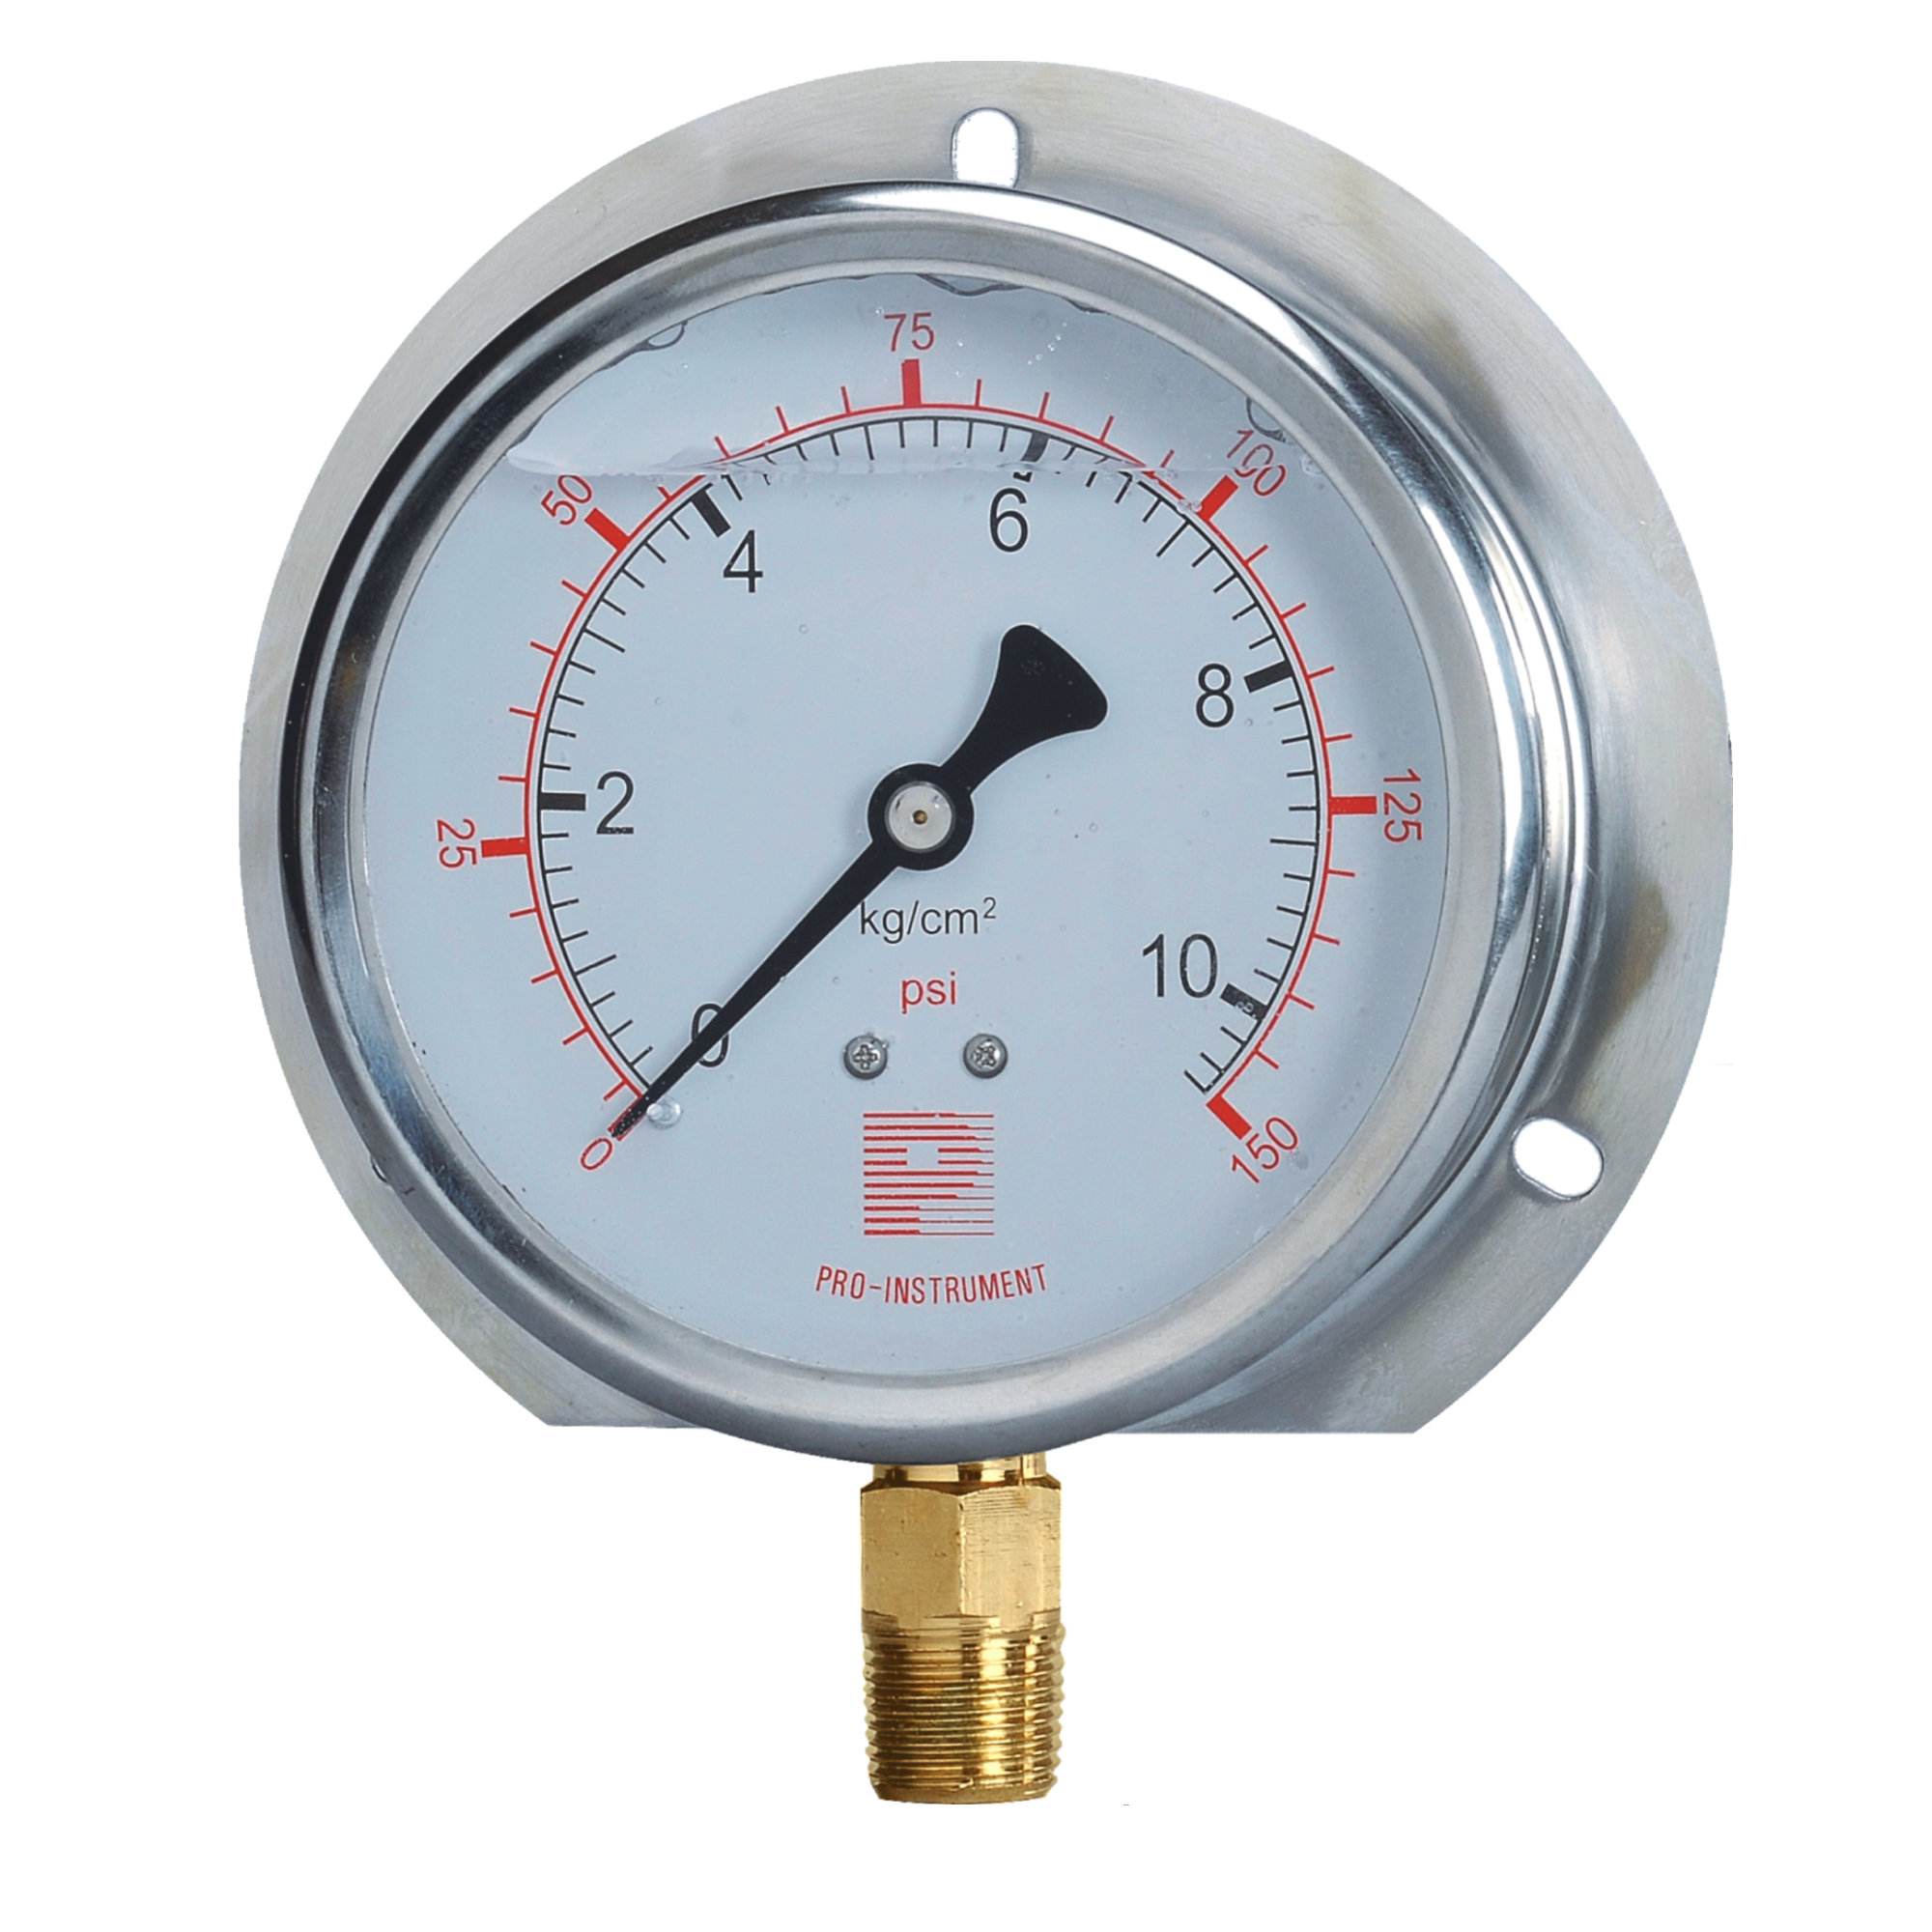 liquid filled, bottom connection pressure gauge with flange